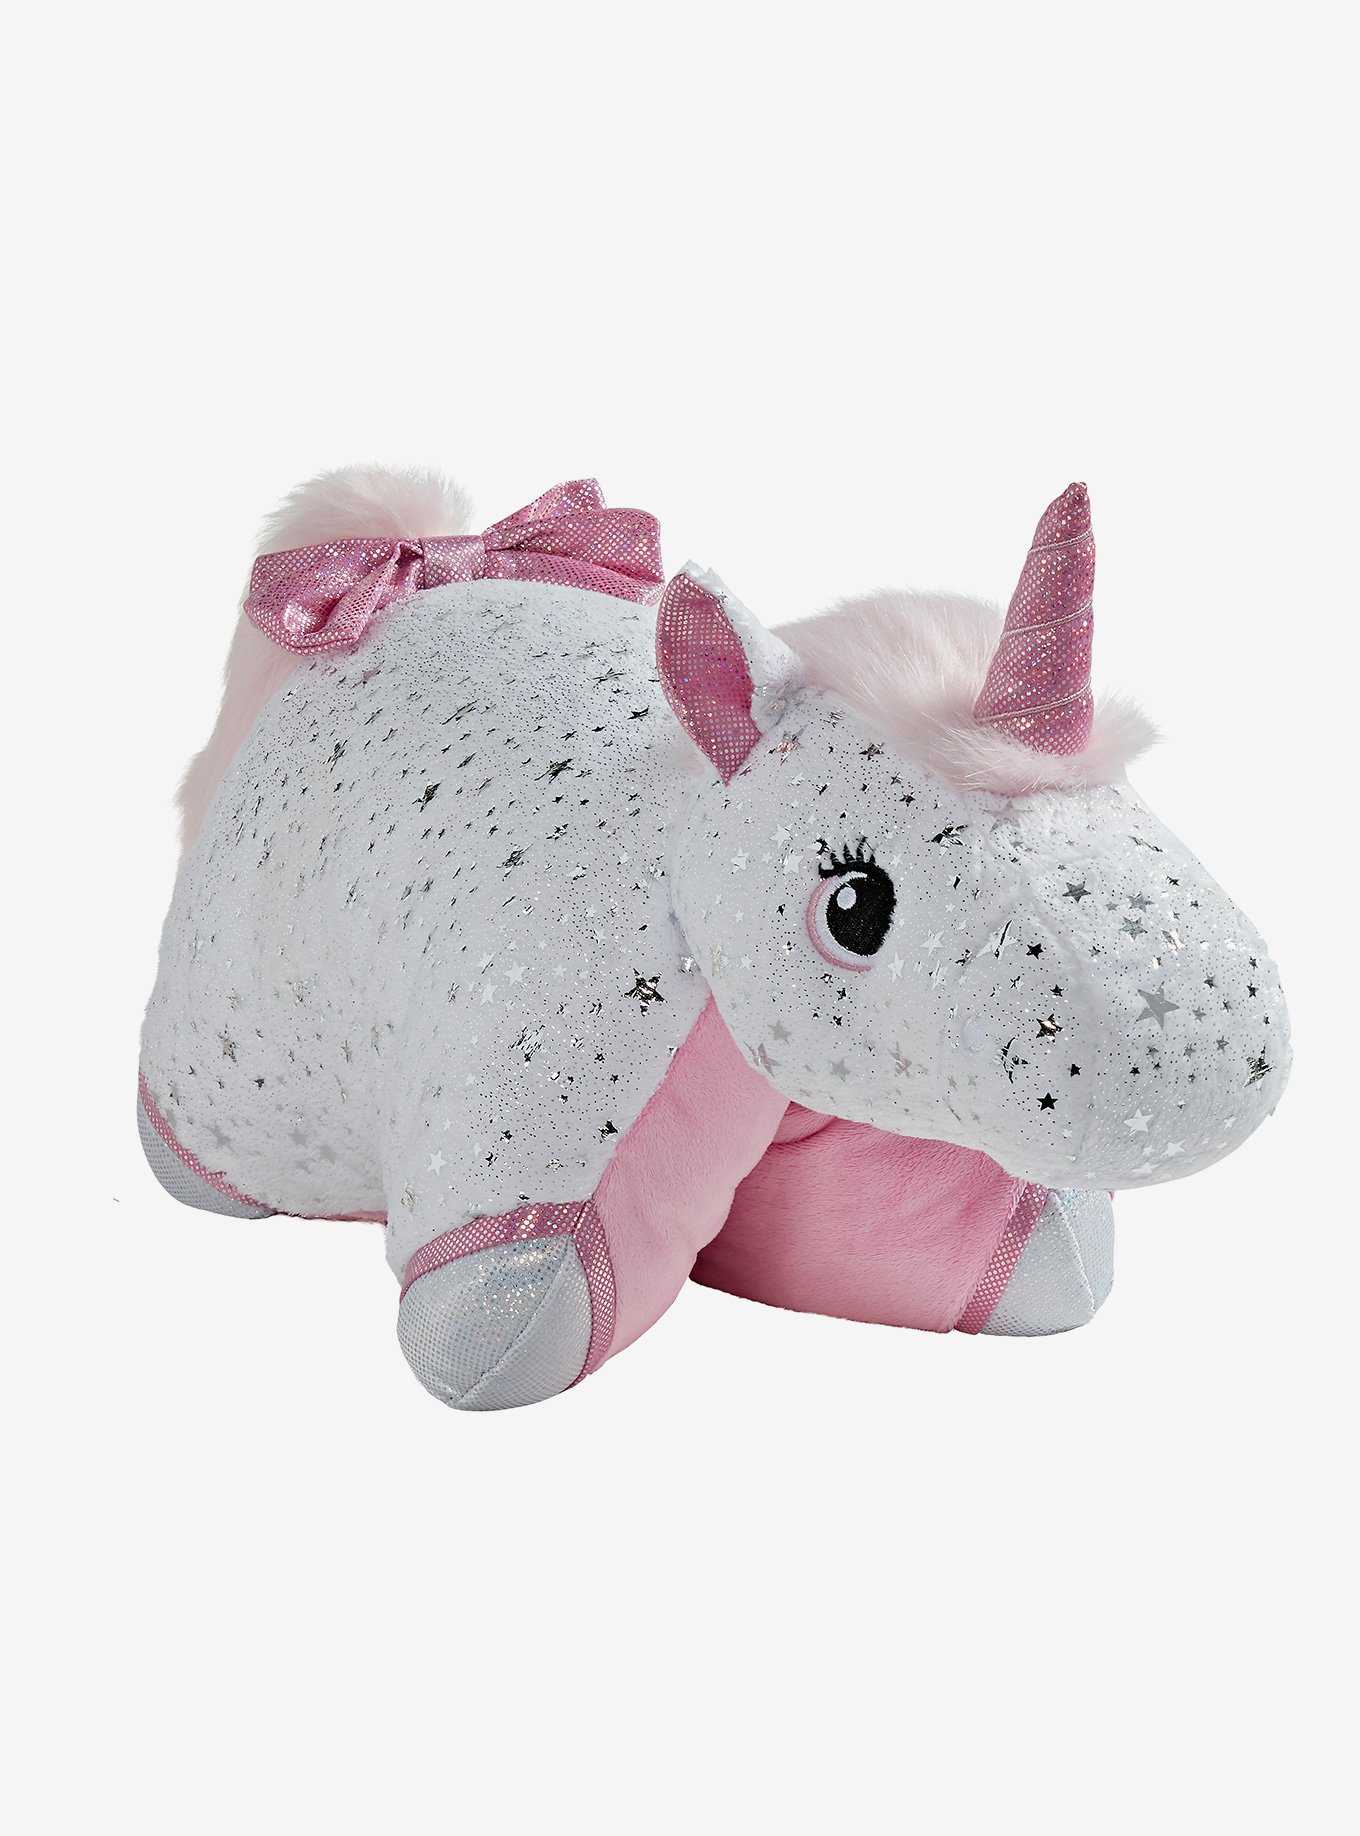 Glittery White Unicorn Pillow Pets Plush Toy, , hi-res